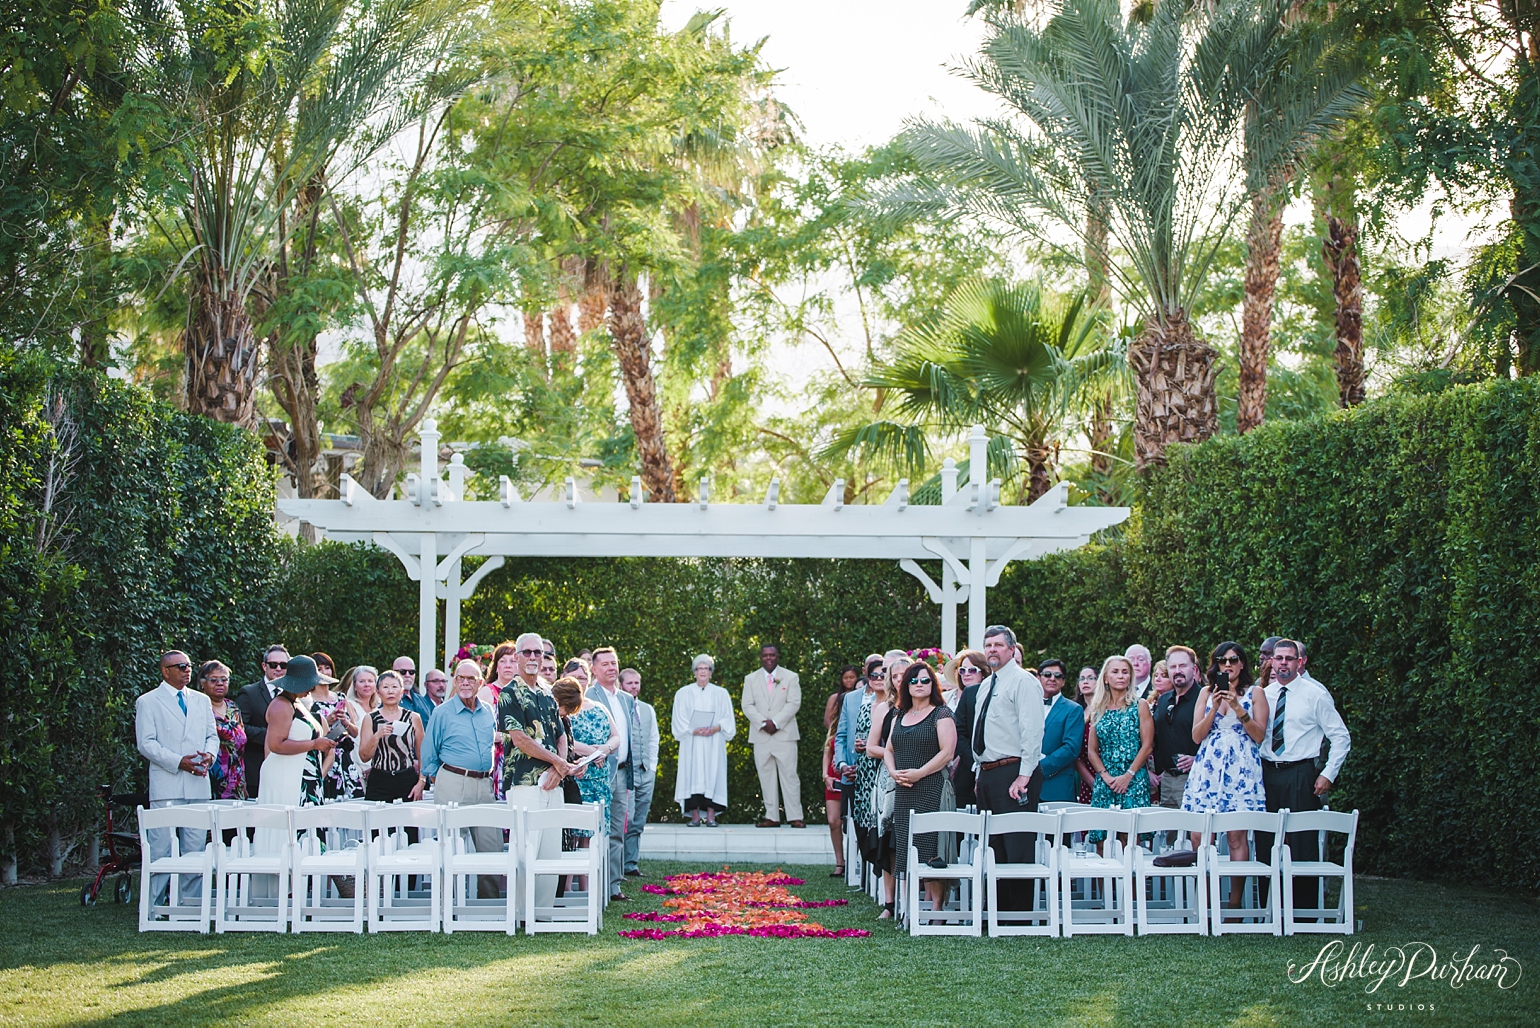 Palm Springs Wedding, Hotel Wedding Palm Springs, Coral and Cream wedding